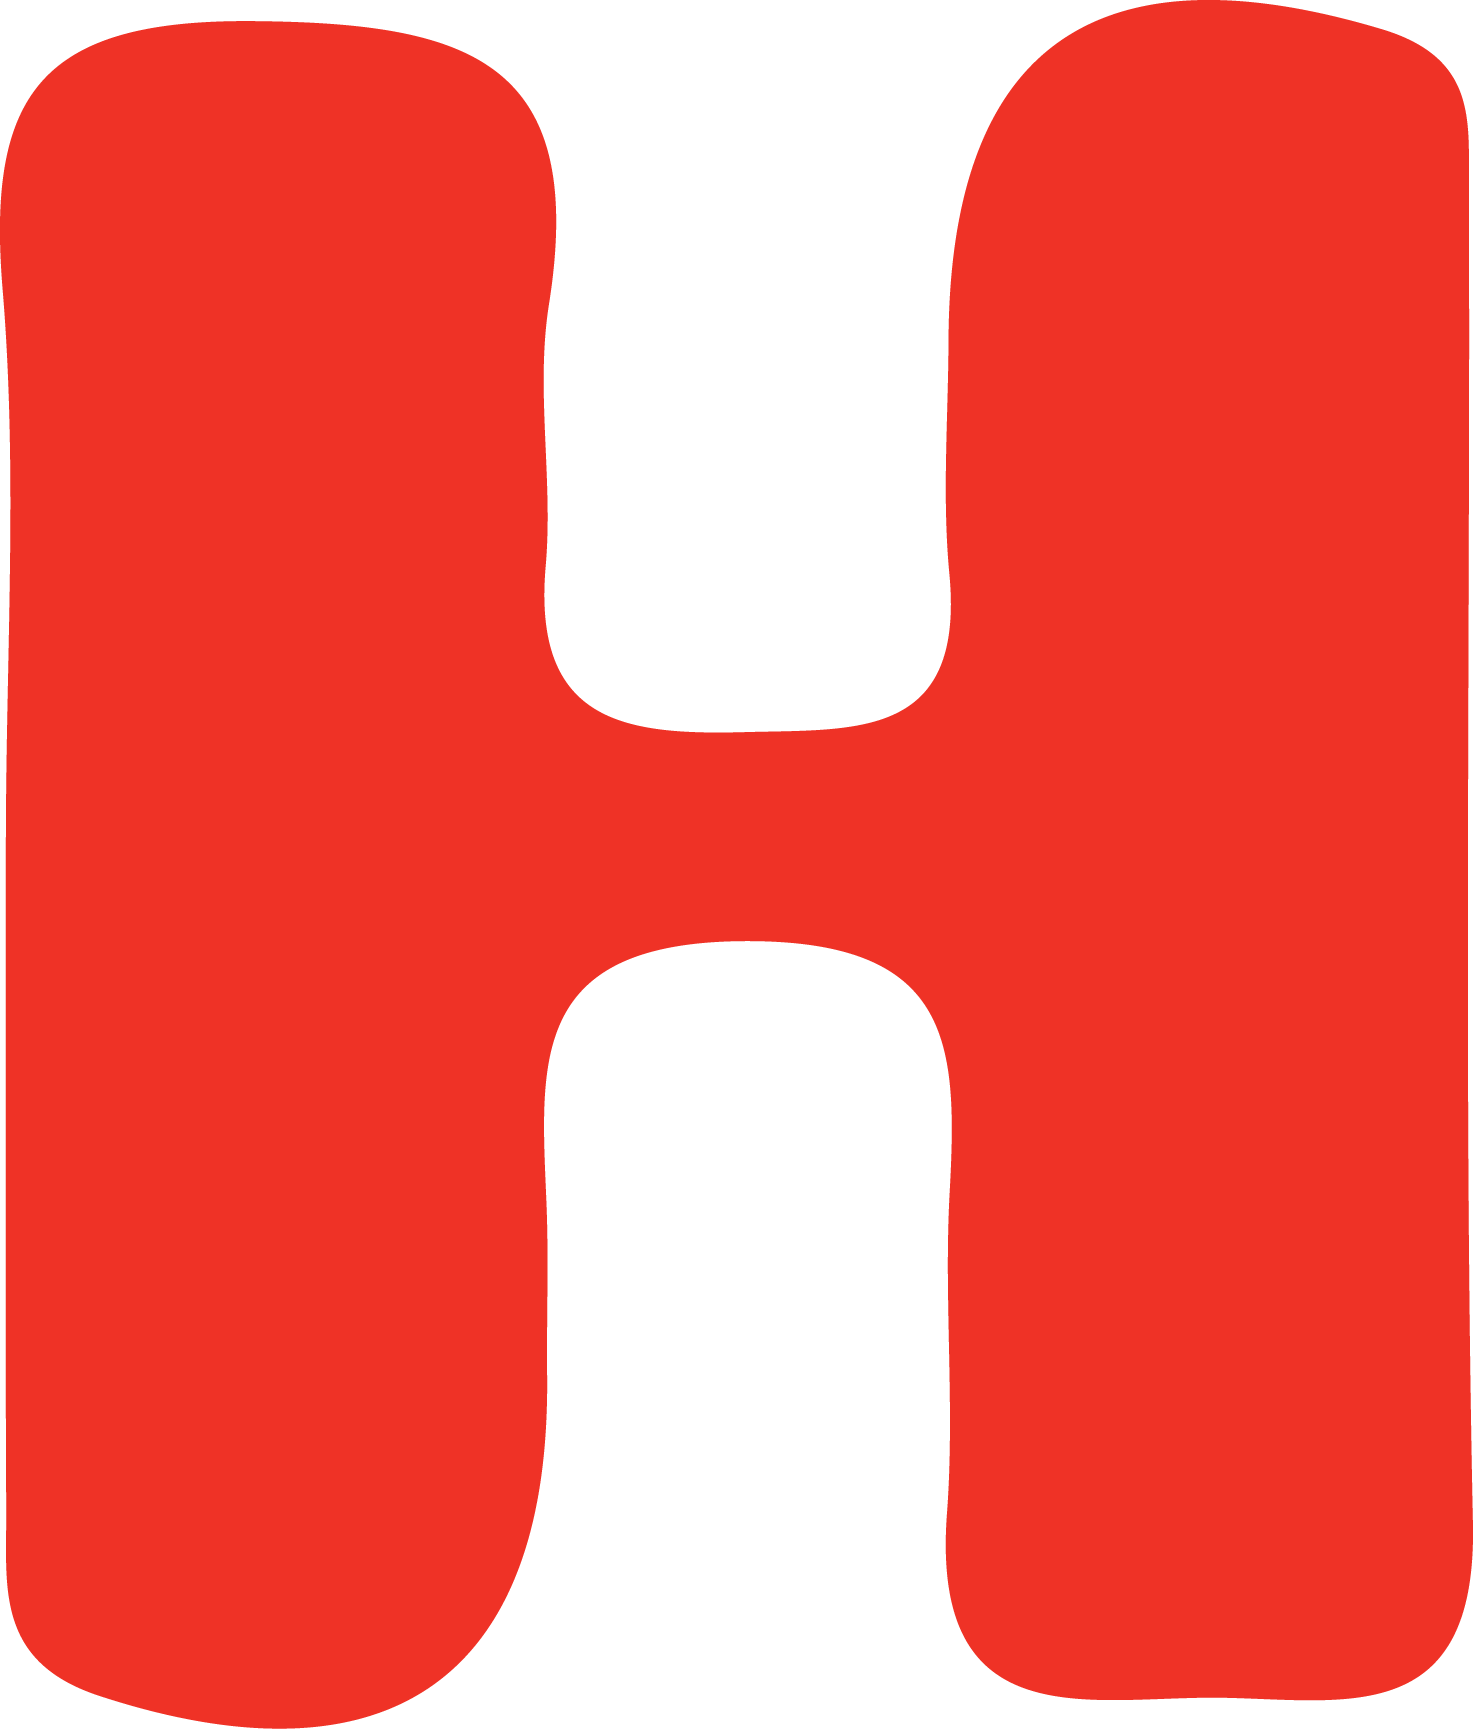 honeywell logo transparent